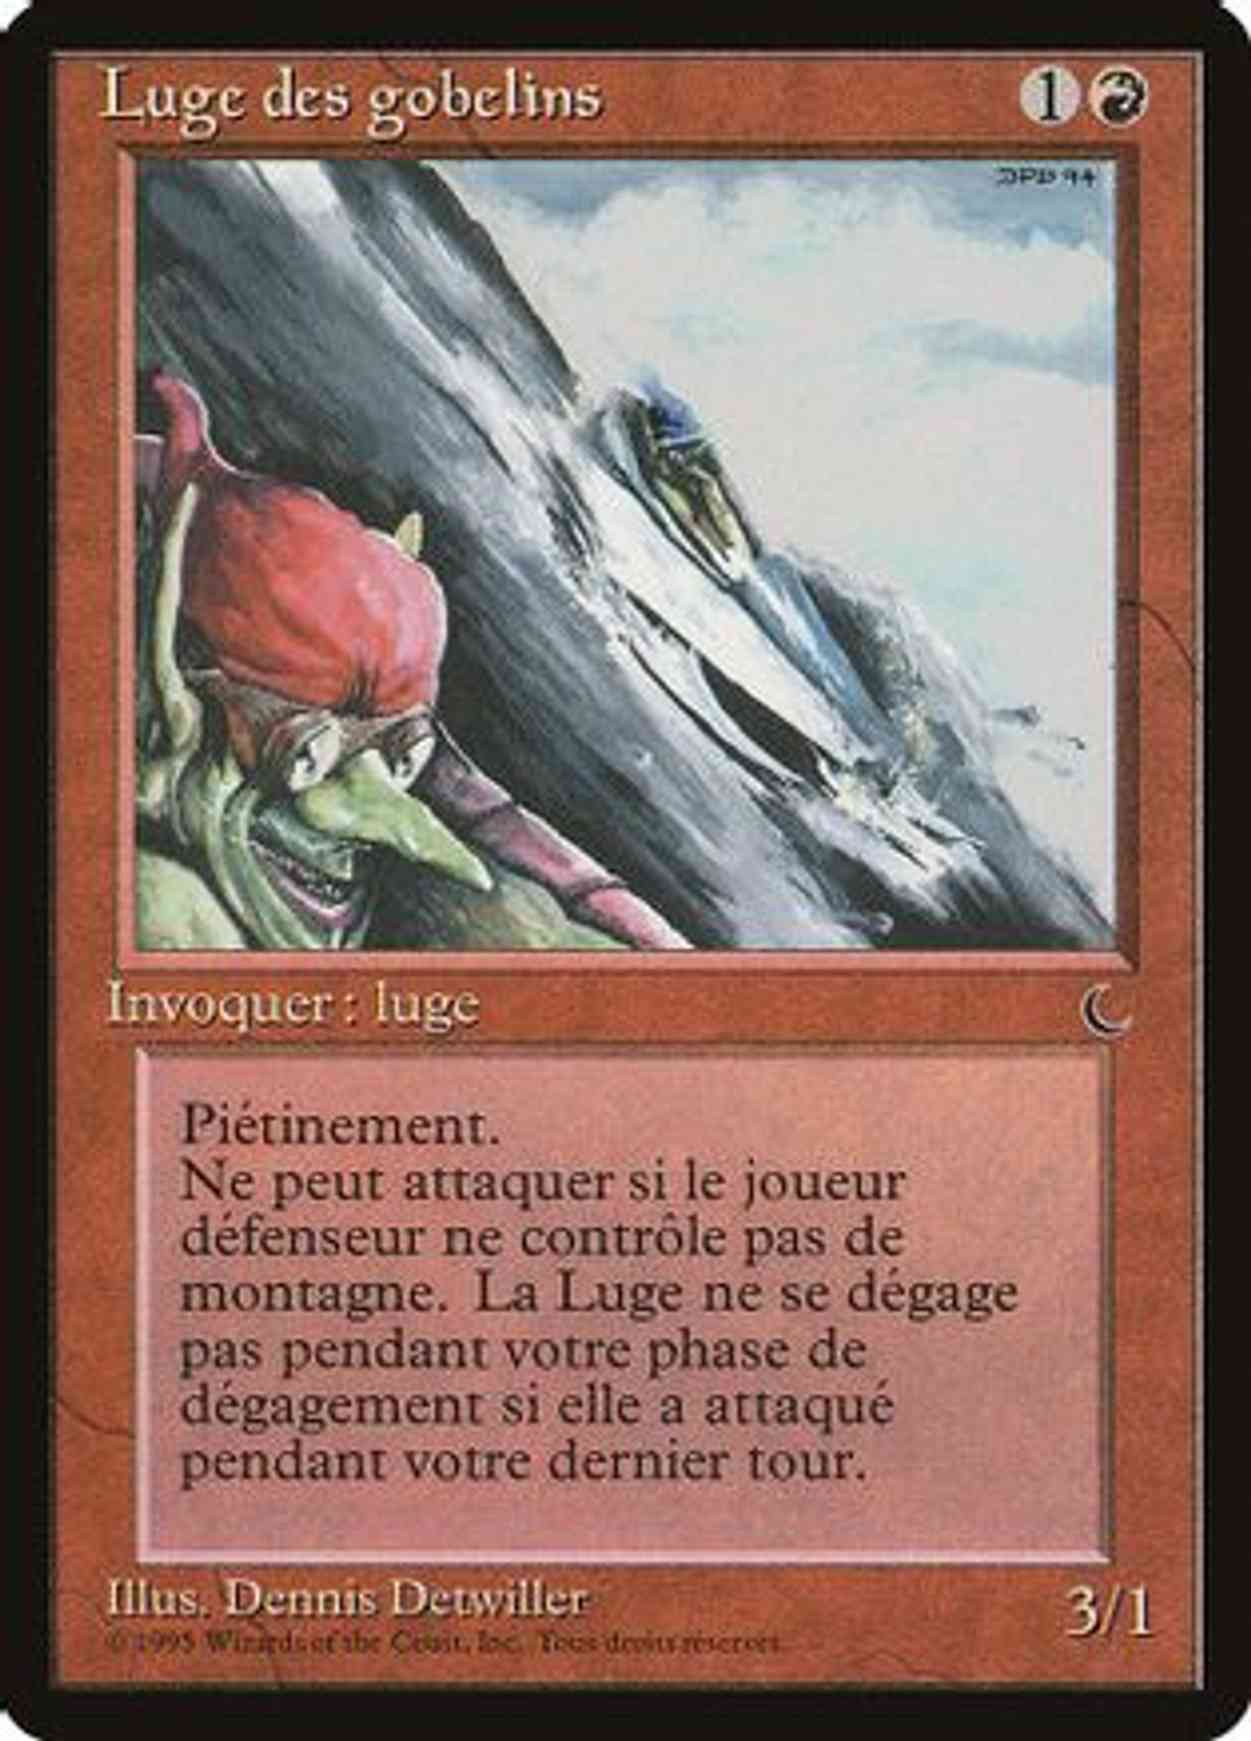 Goblin Rock Sled (French) - "Luge des gobelins" magic card front